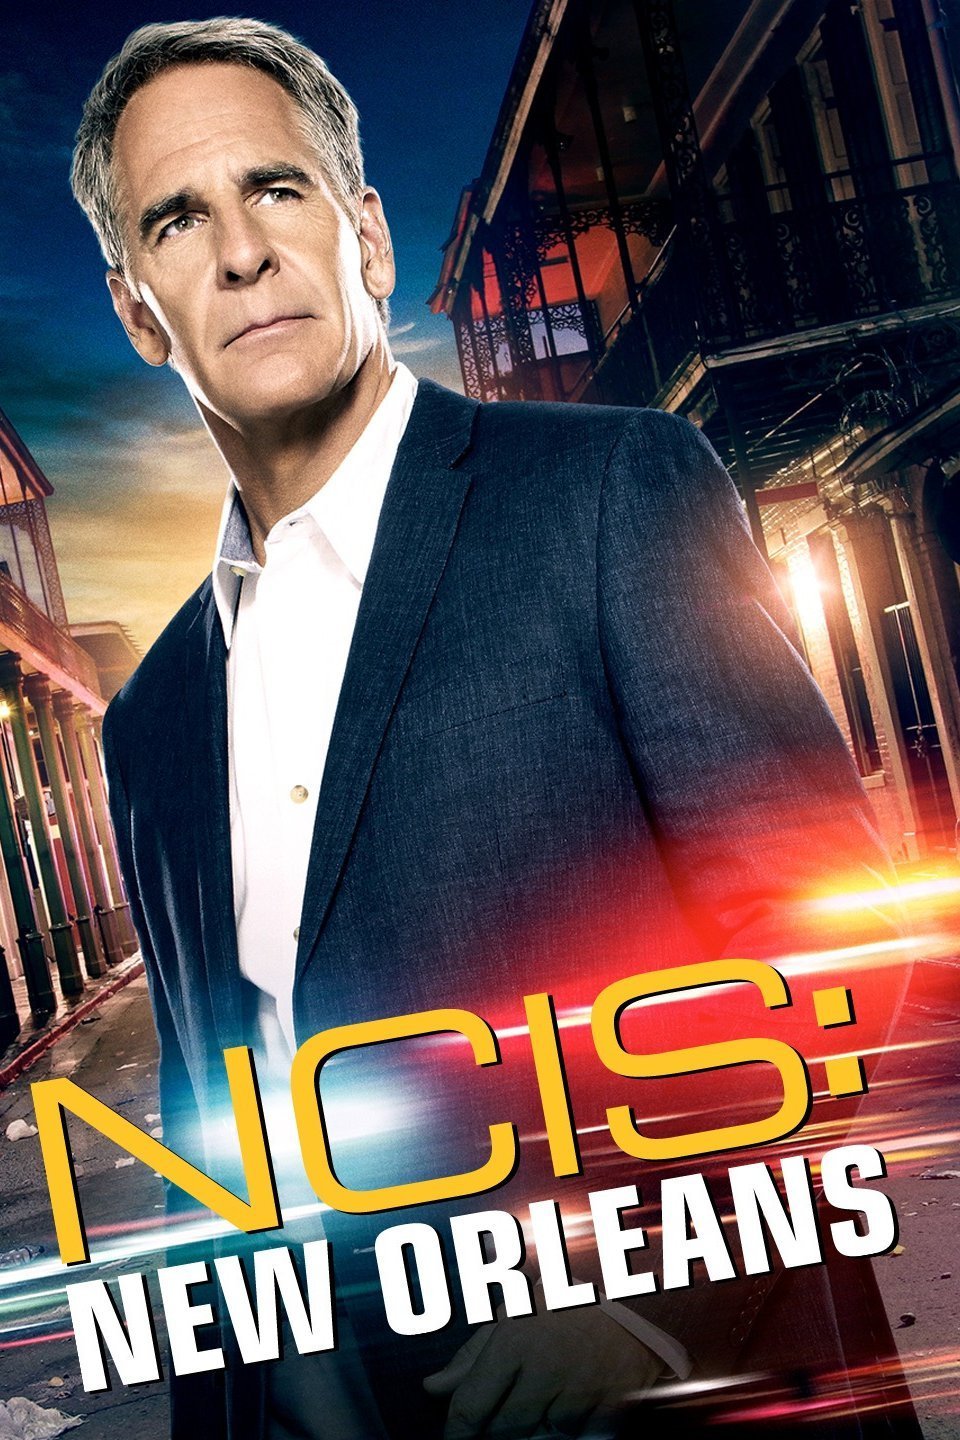 NCIS New Orleans S04E07 720p HDTV X264-DIMENSION - SoftArchive